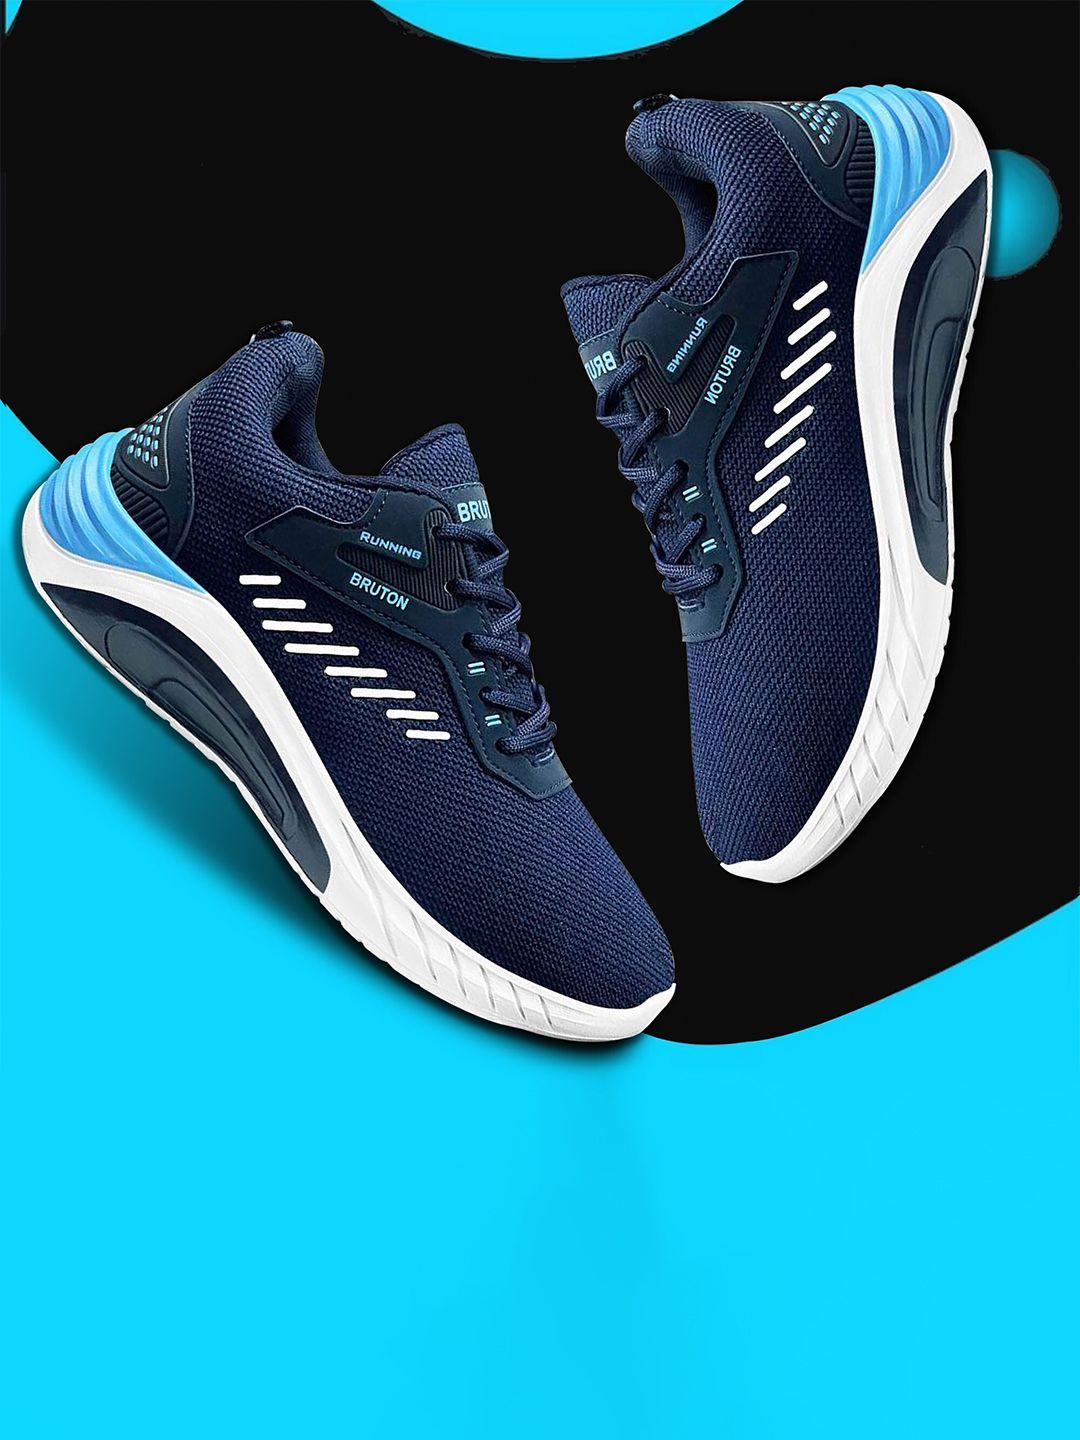 bruton men blue mesh running shoes